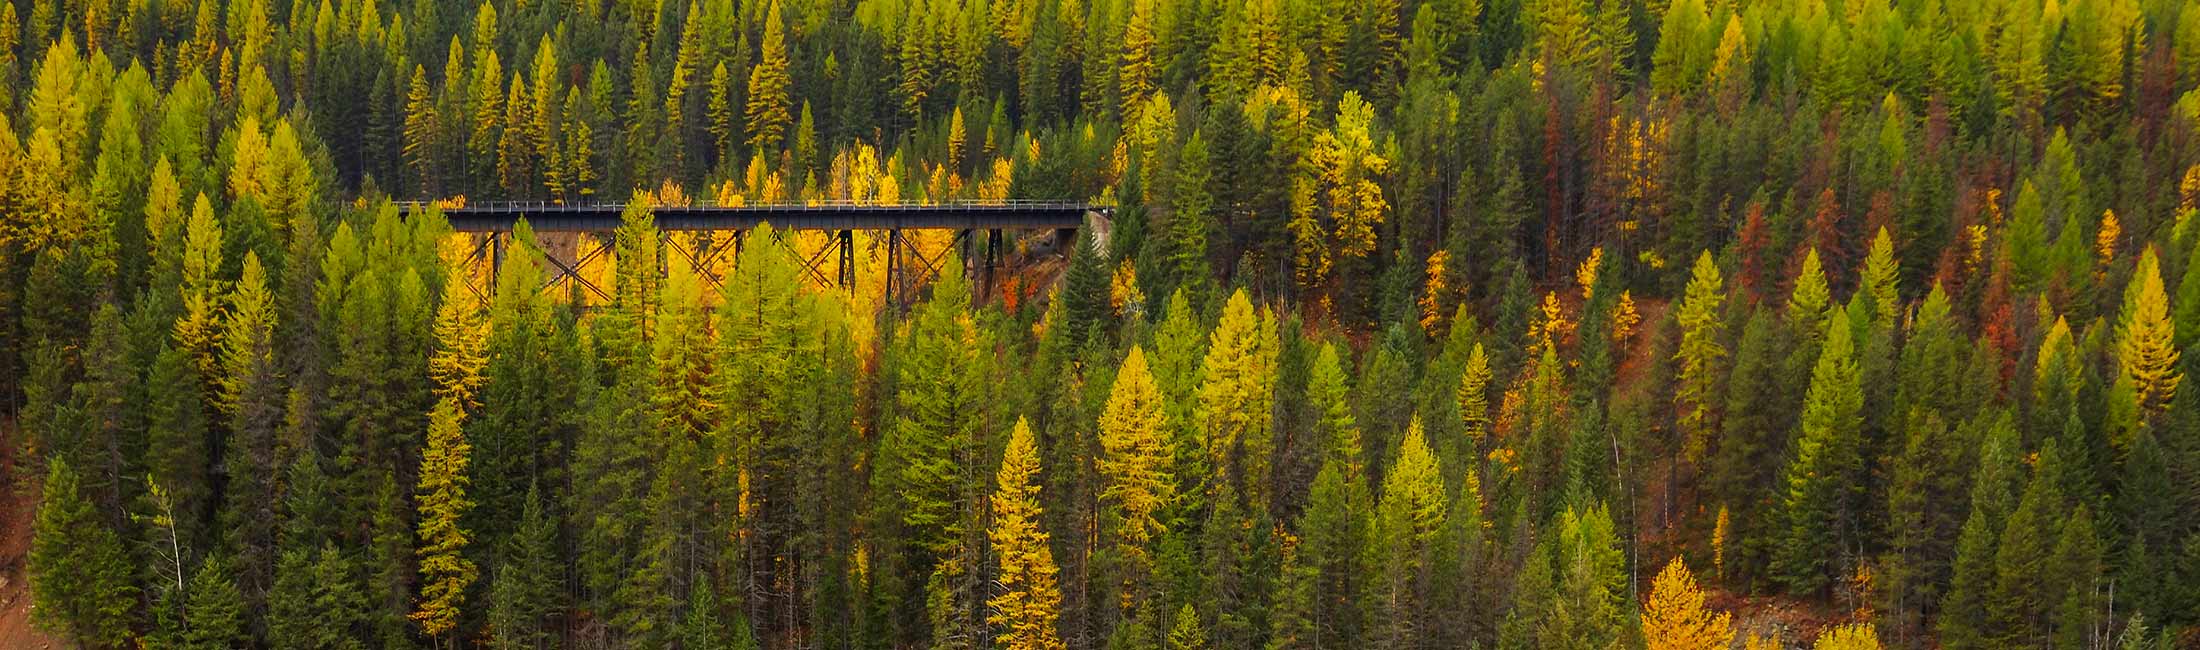 Tamarack Trees provide beautiful colors in Glacier National Park, Montana